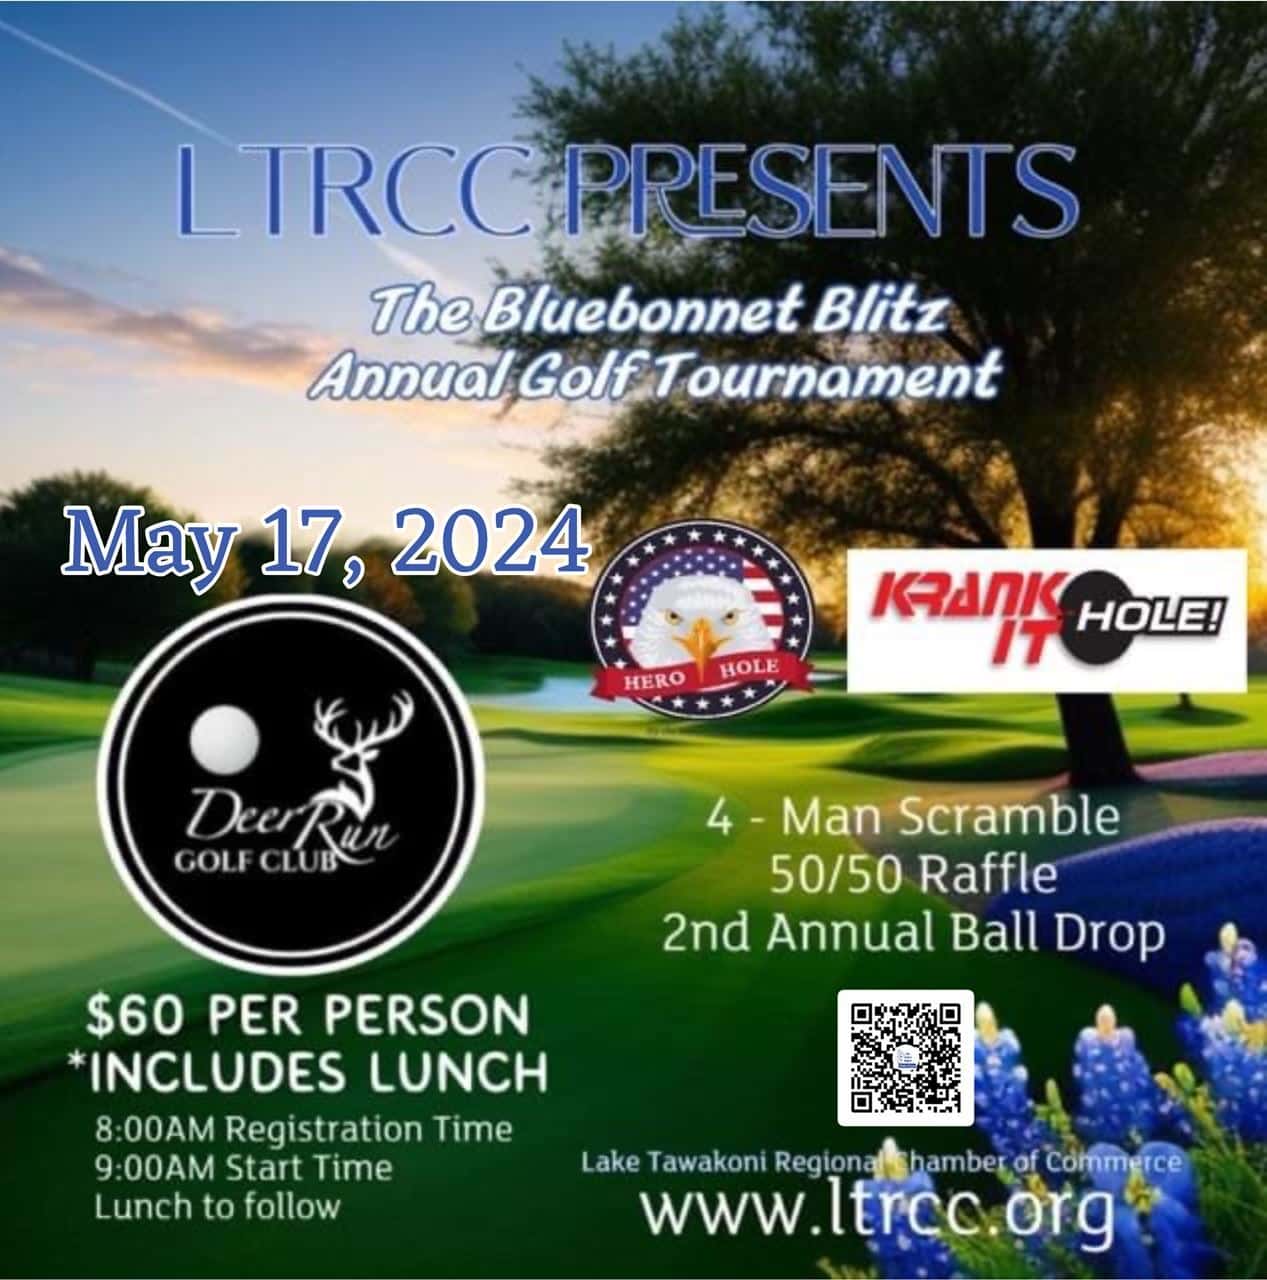 Bluebonnet Blitz Annual Golf Tournament